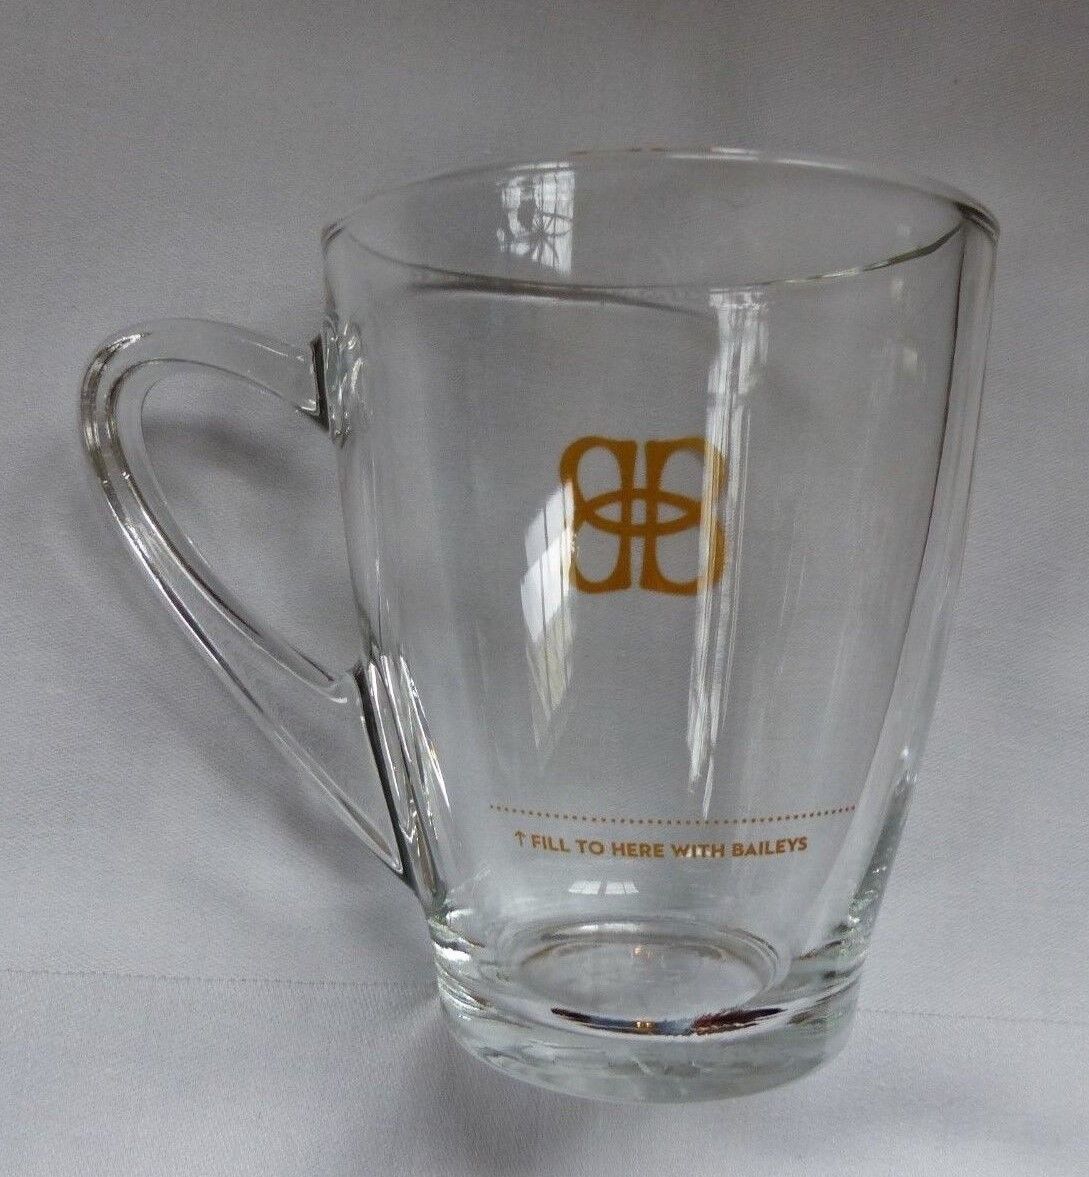 Bailey's Logo Glass Cup Mug With Handle Collectible Gift Без бренда - фотография #6